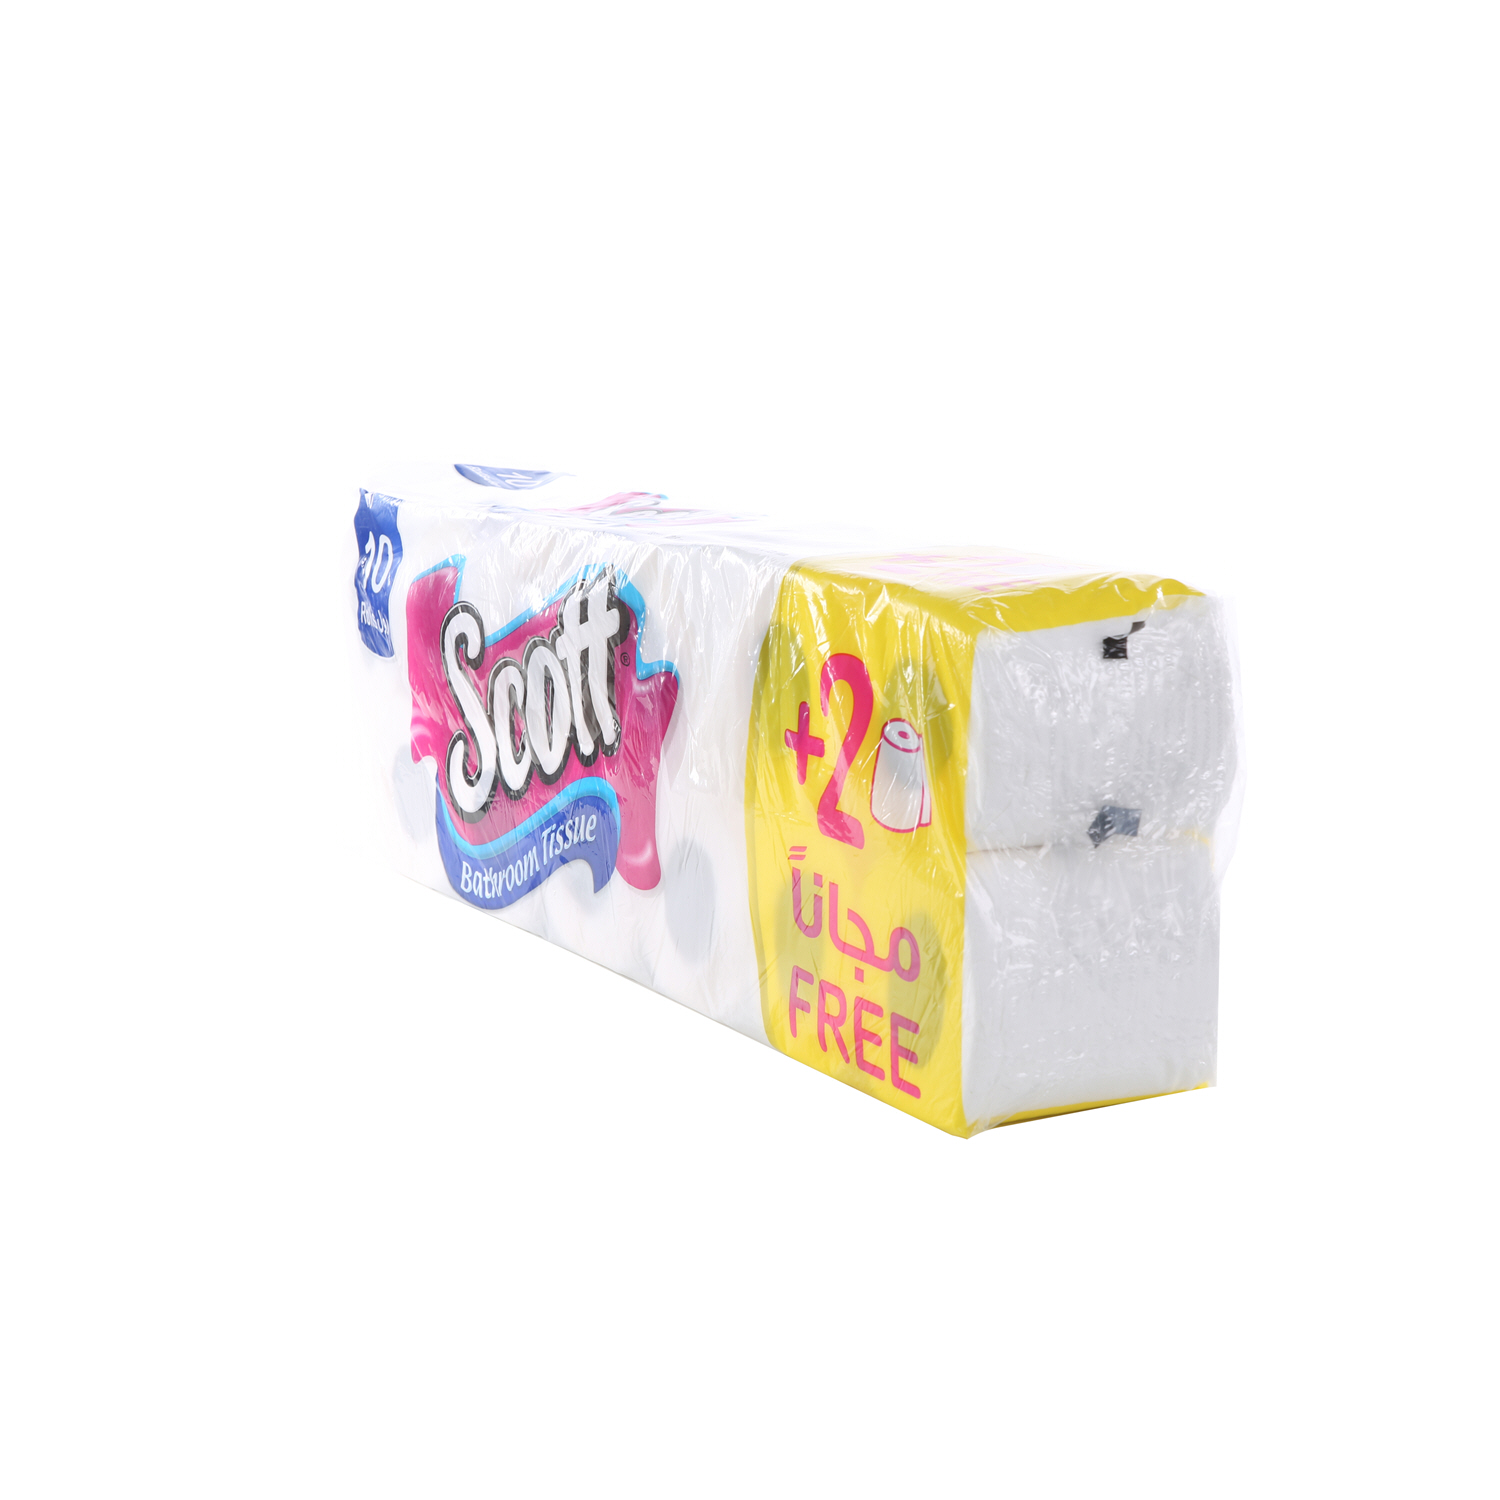 Scott Extra Soft Bathroom Tissue Unscented Roll 10 + 2 Free